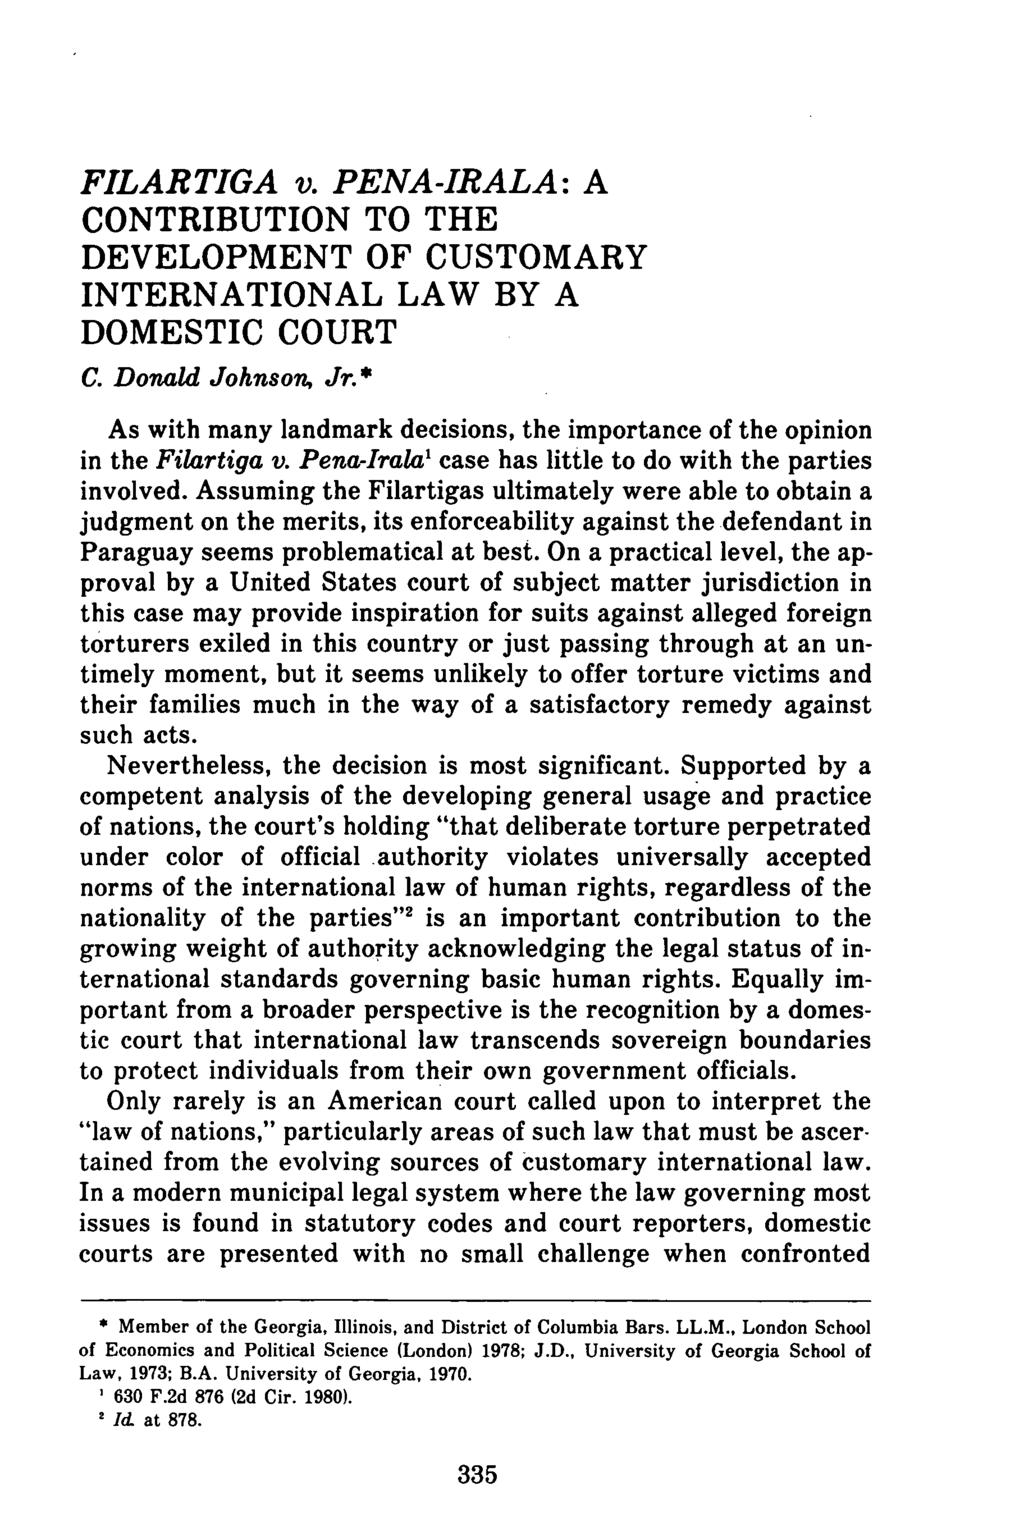 FILARTIGA v. PENA-IRALA: A CONTRIBUTION TO THE DEVELOPMENT OF CUSTOMARY INTERNATIONAL LAW BY A DOMESTIC COURT C. Donald Johnson, Jr.